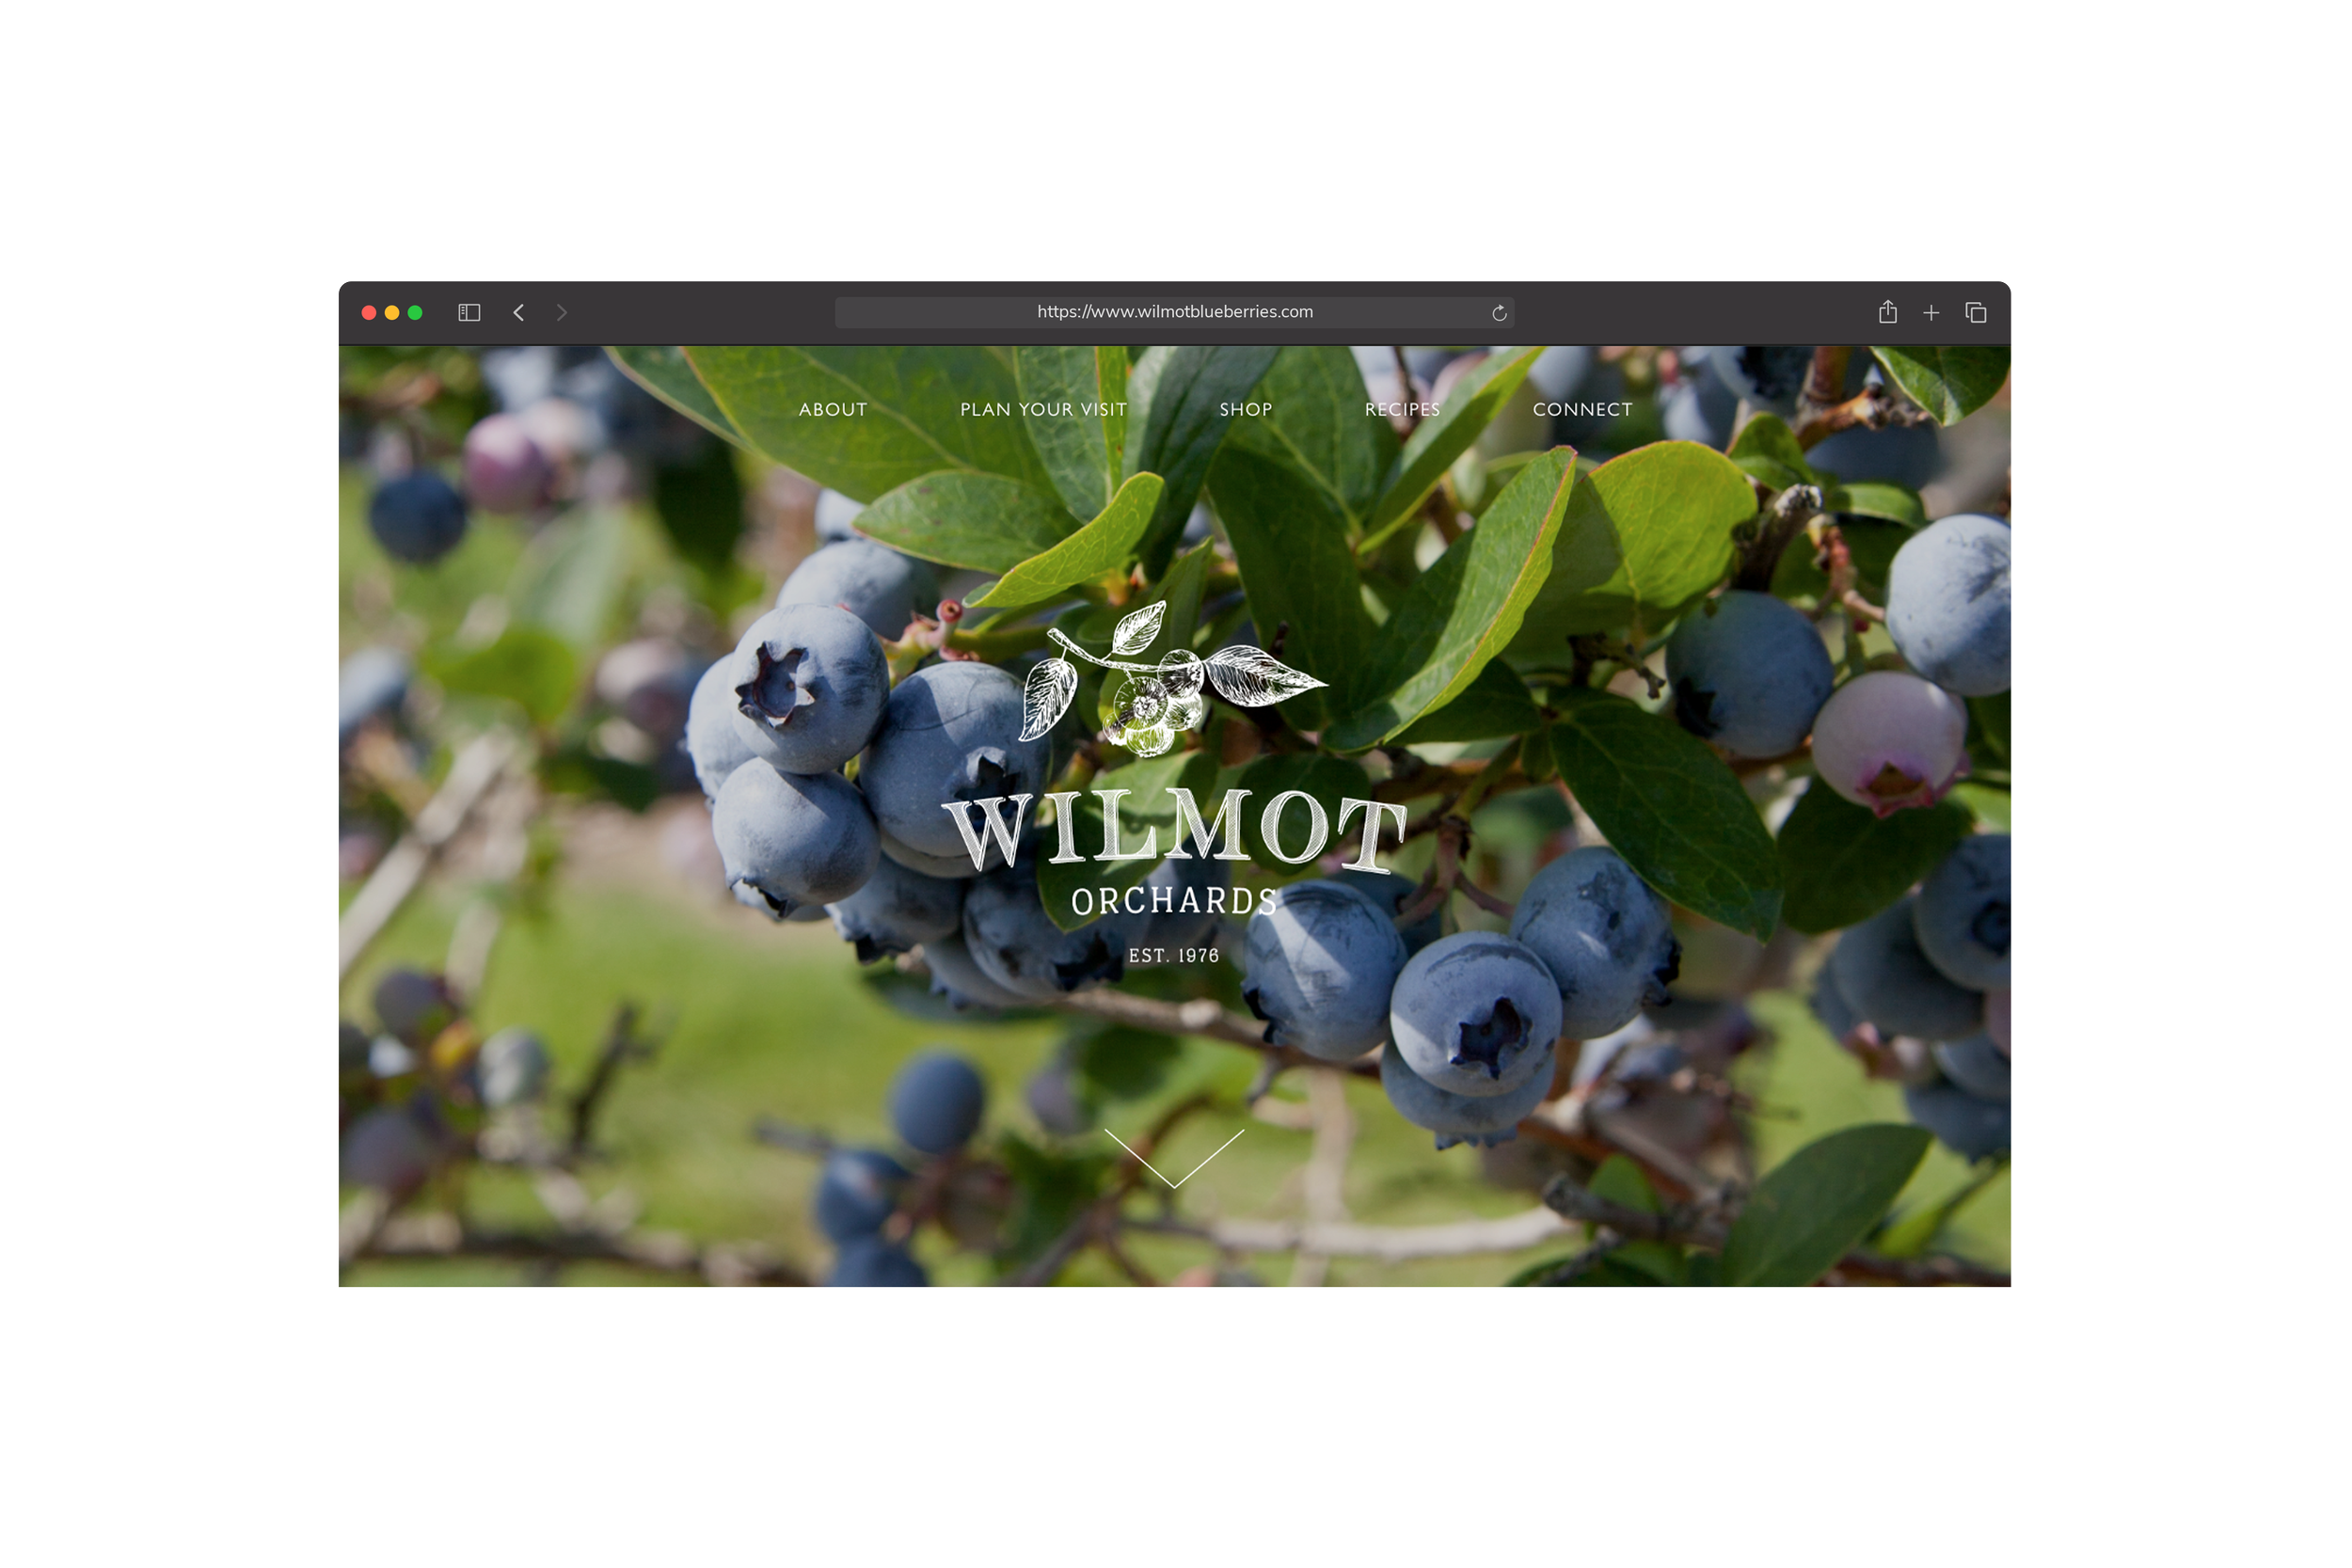 Wilmot Orchards